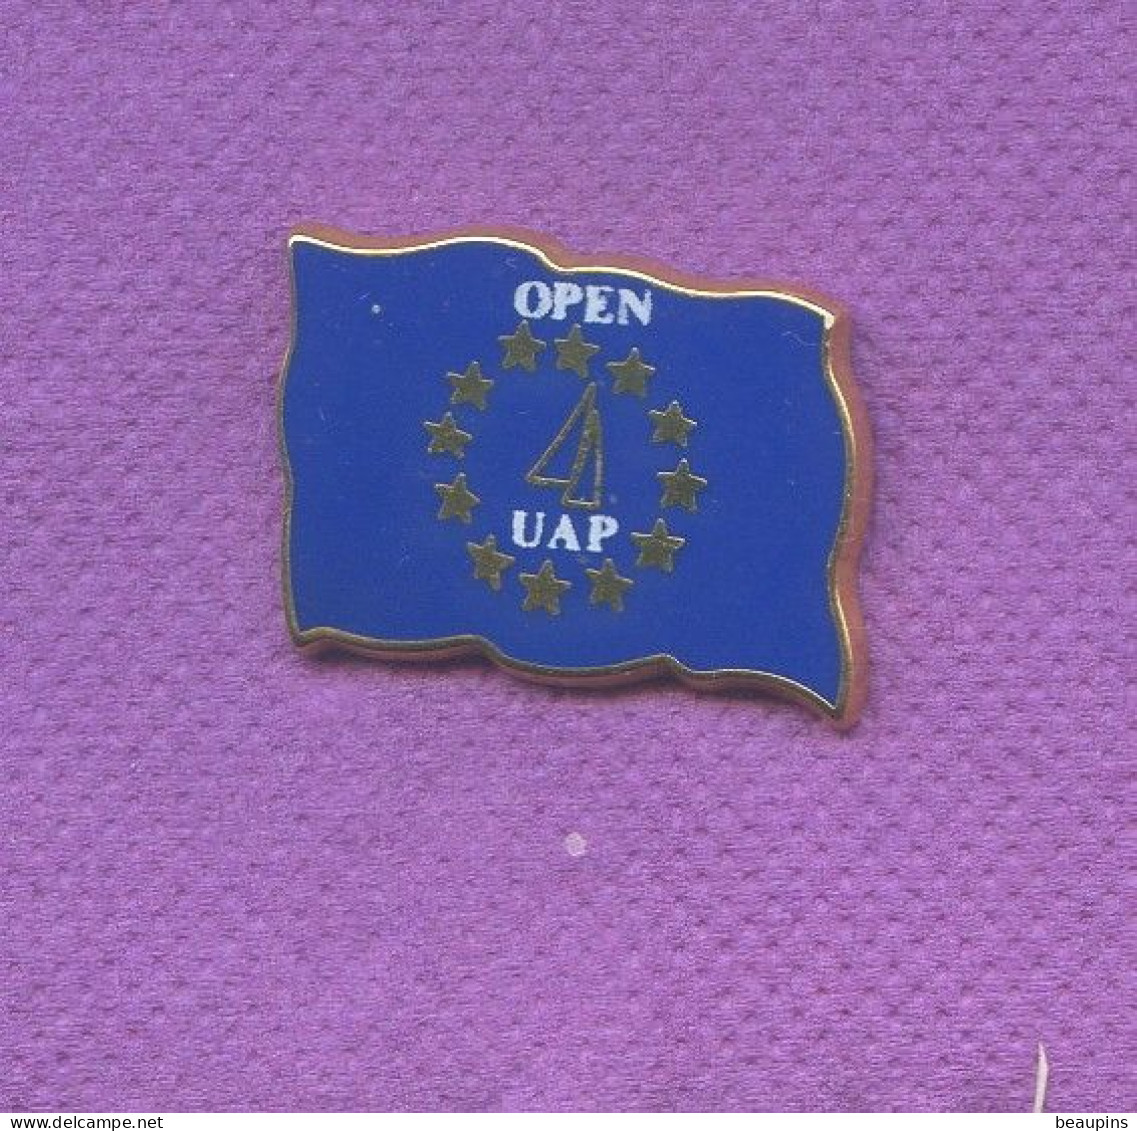 Rare Pins Voile Open Assurance Uap Drapeau Europe Zamac Starpins L399 - Zeilen